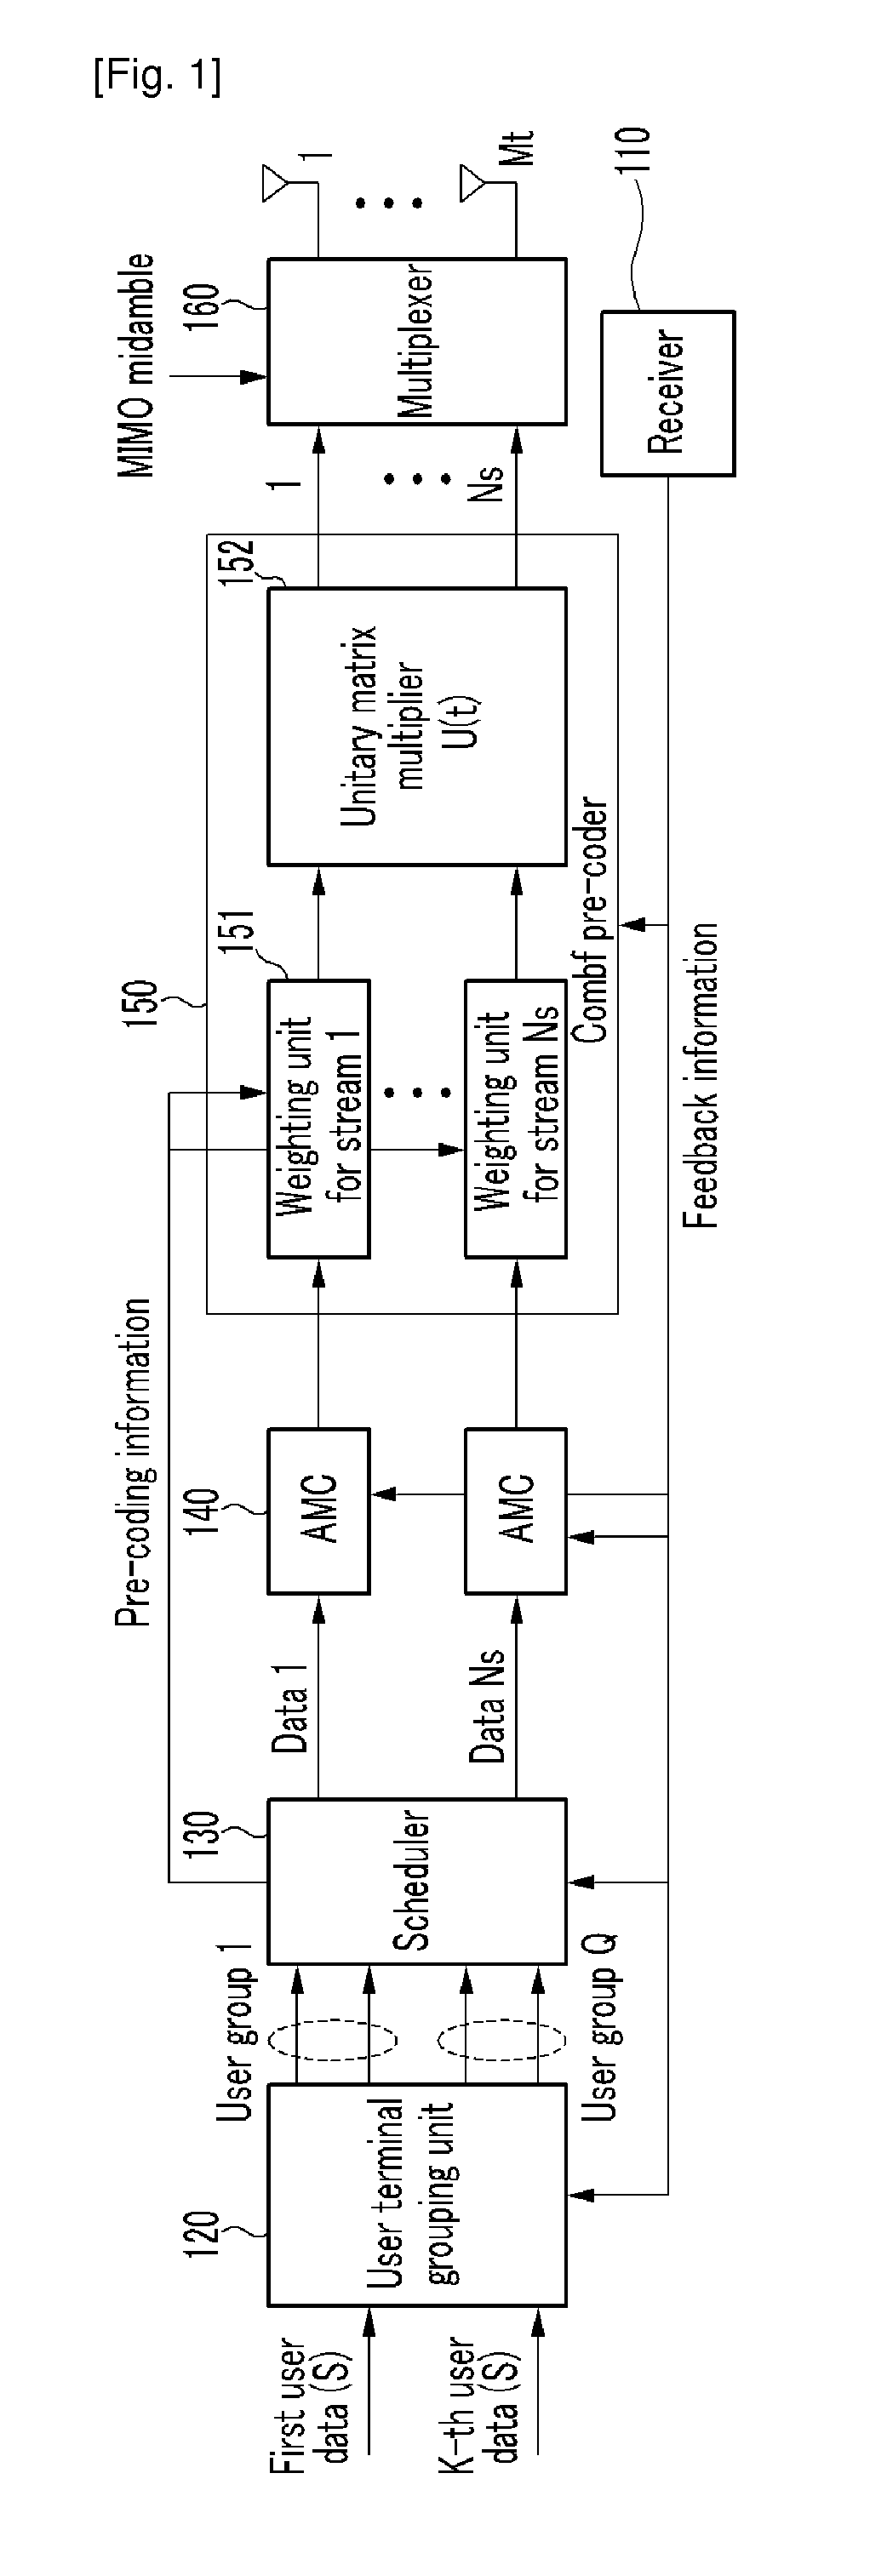 Multiple beamforming method and apparatus